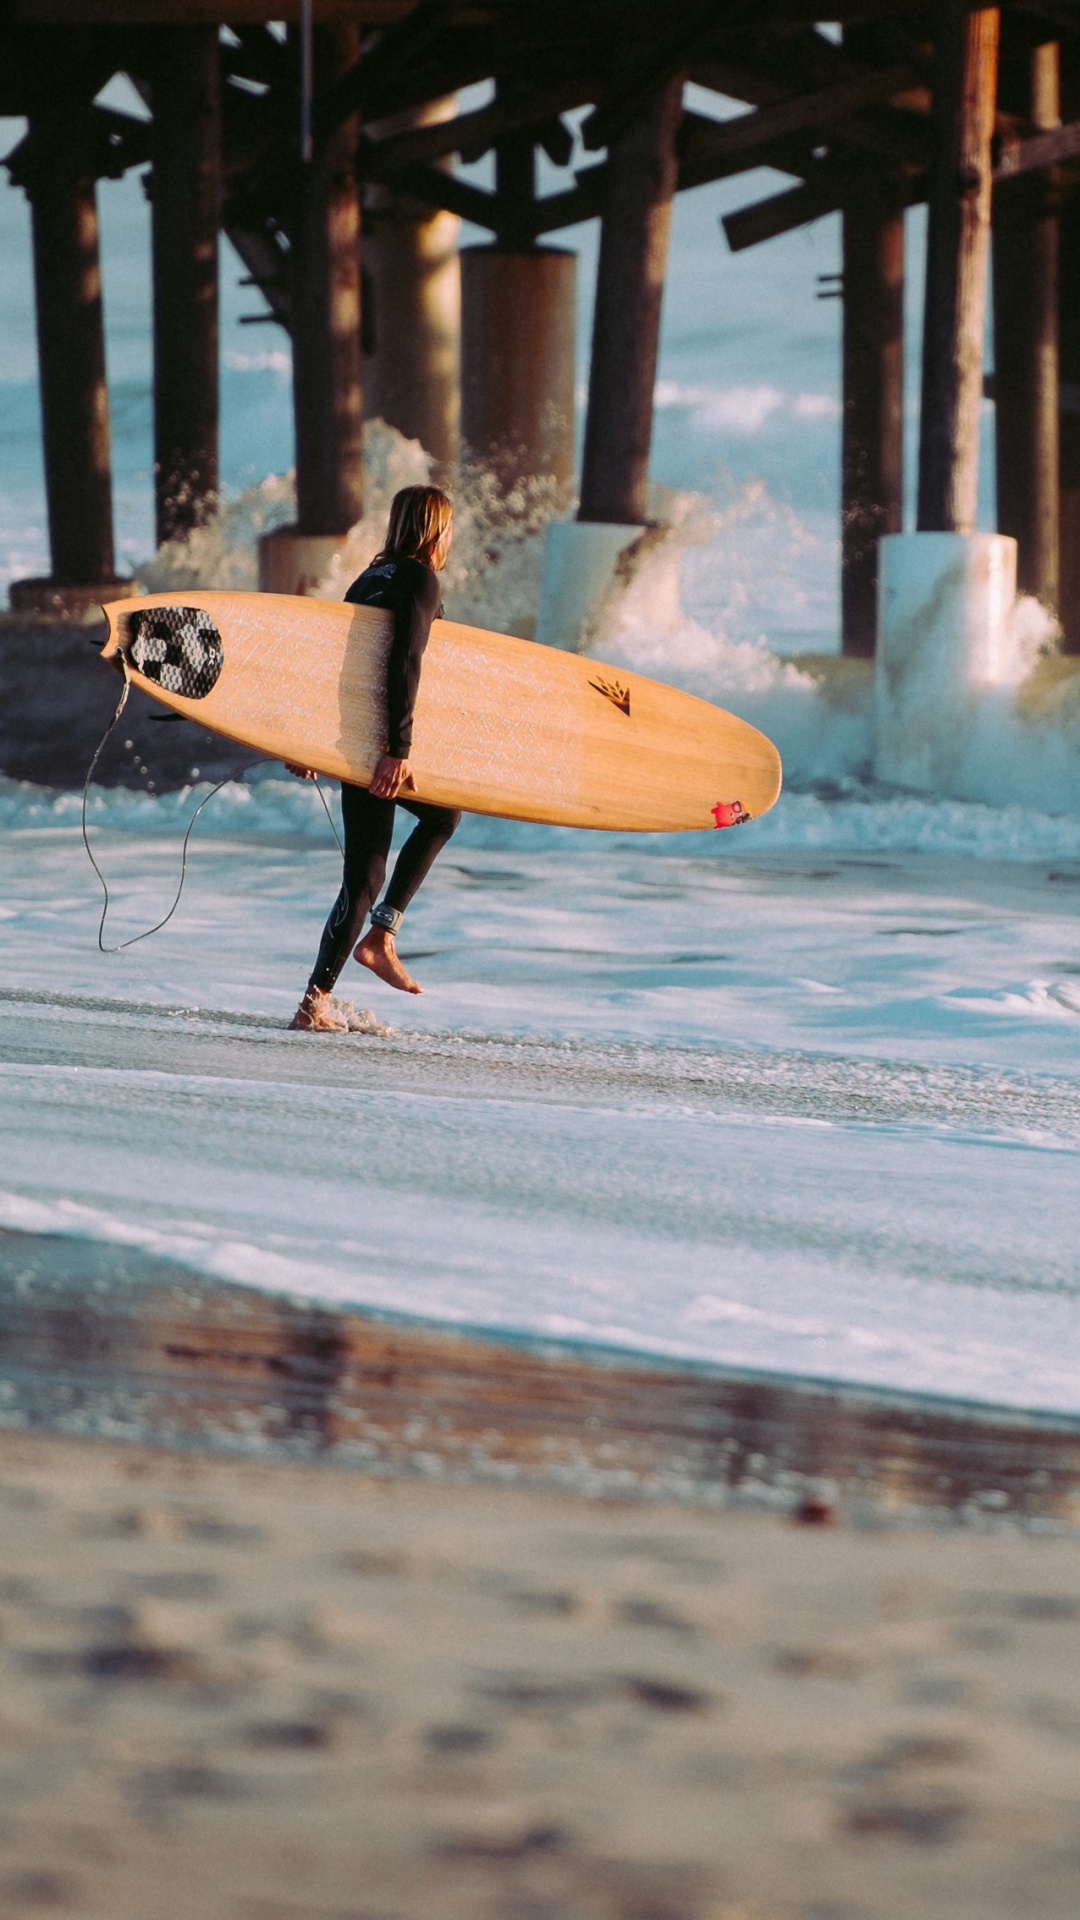 冲浪, 冲浪板, Skimboarding, Boardsport, 表面的水上运动 壁纸 1080x1920 允许